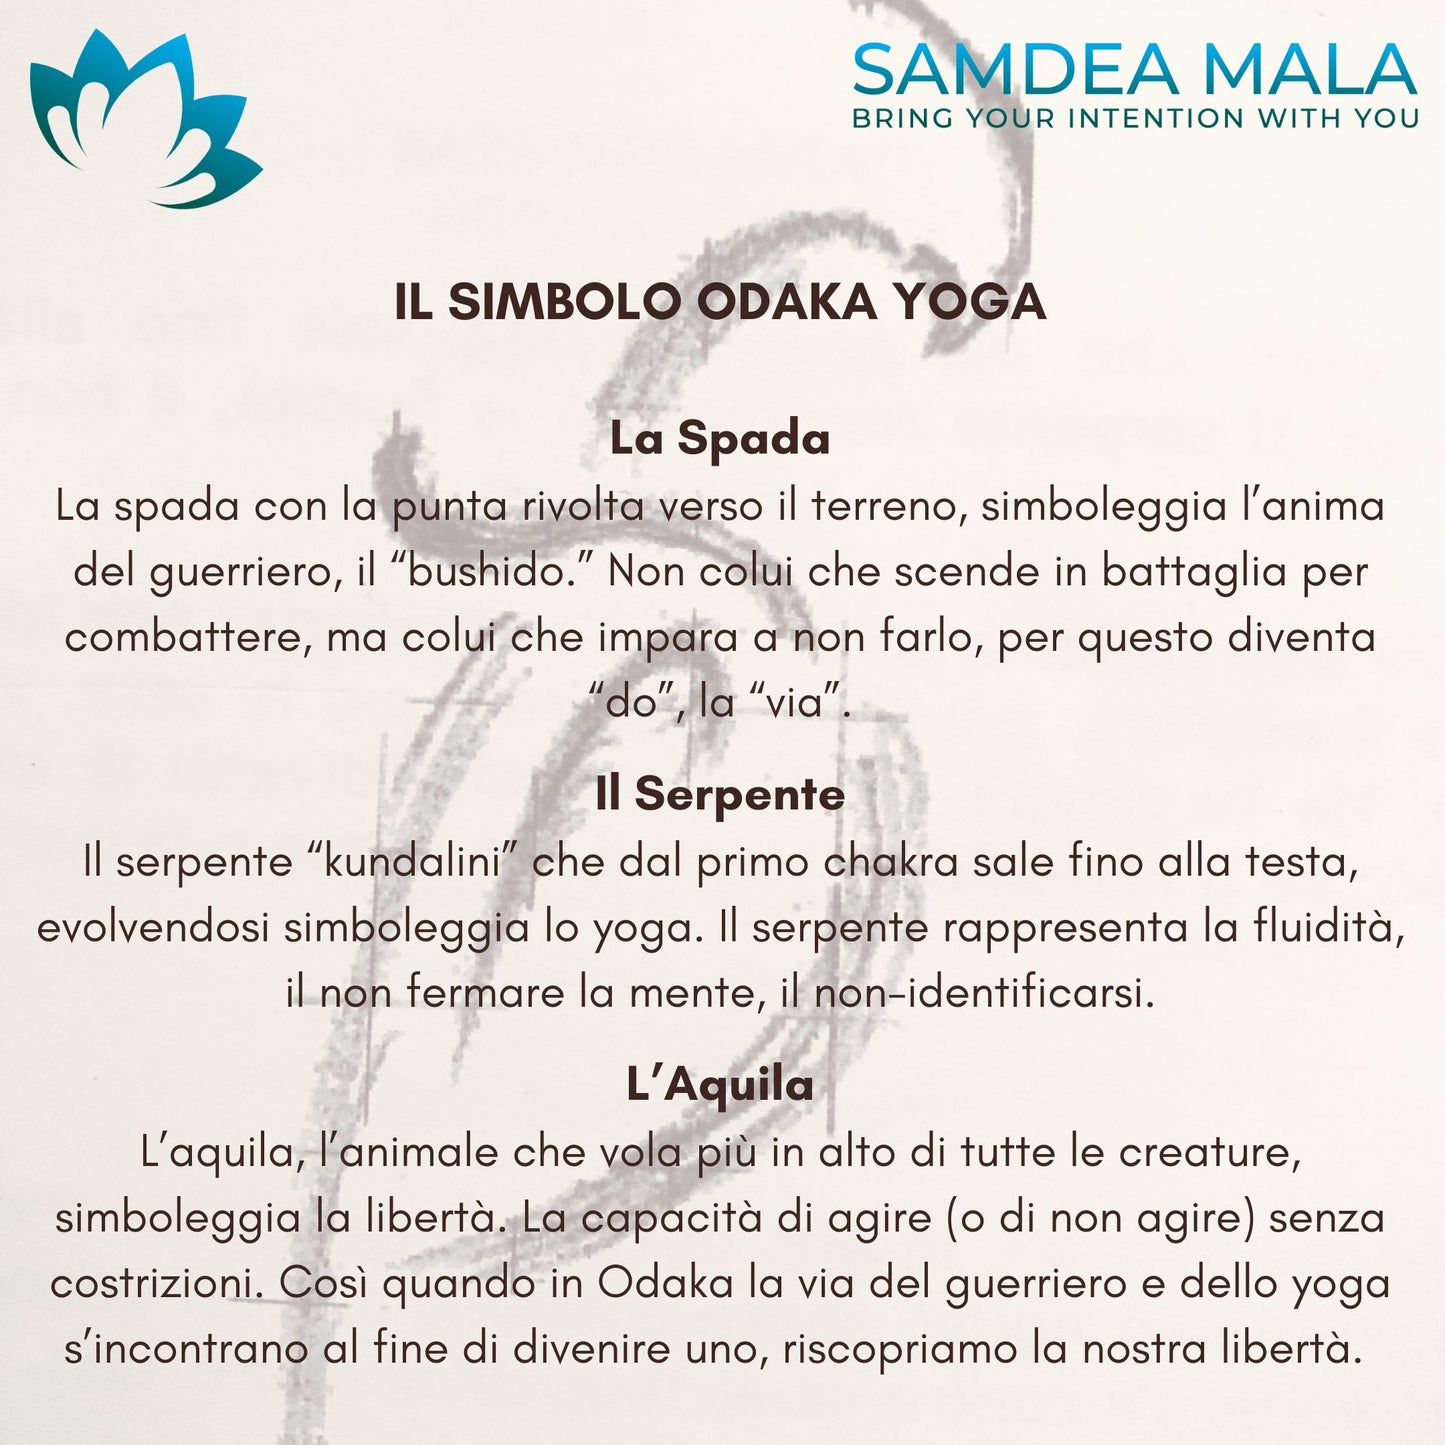 Odaka yoga - the symbol